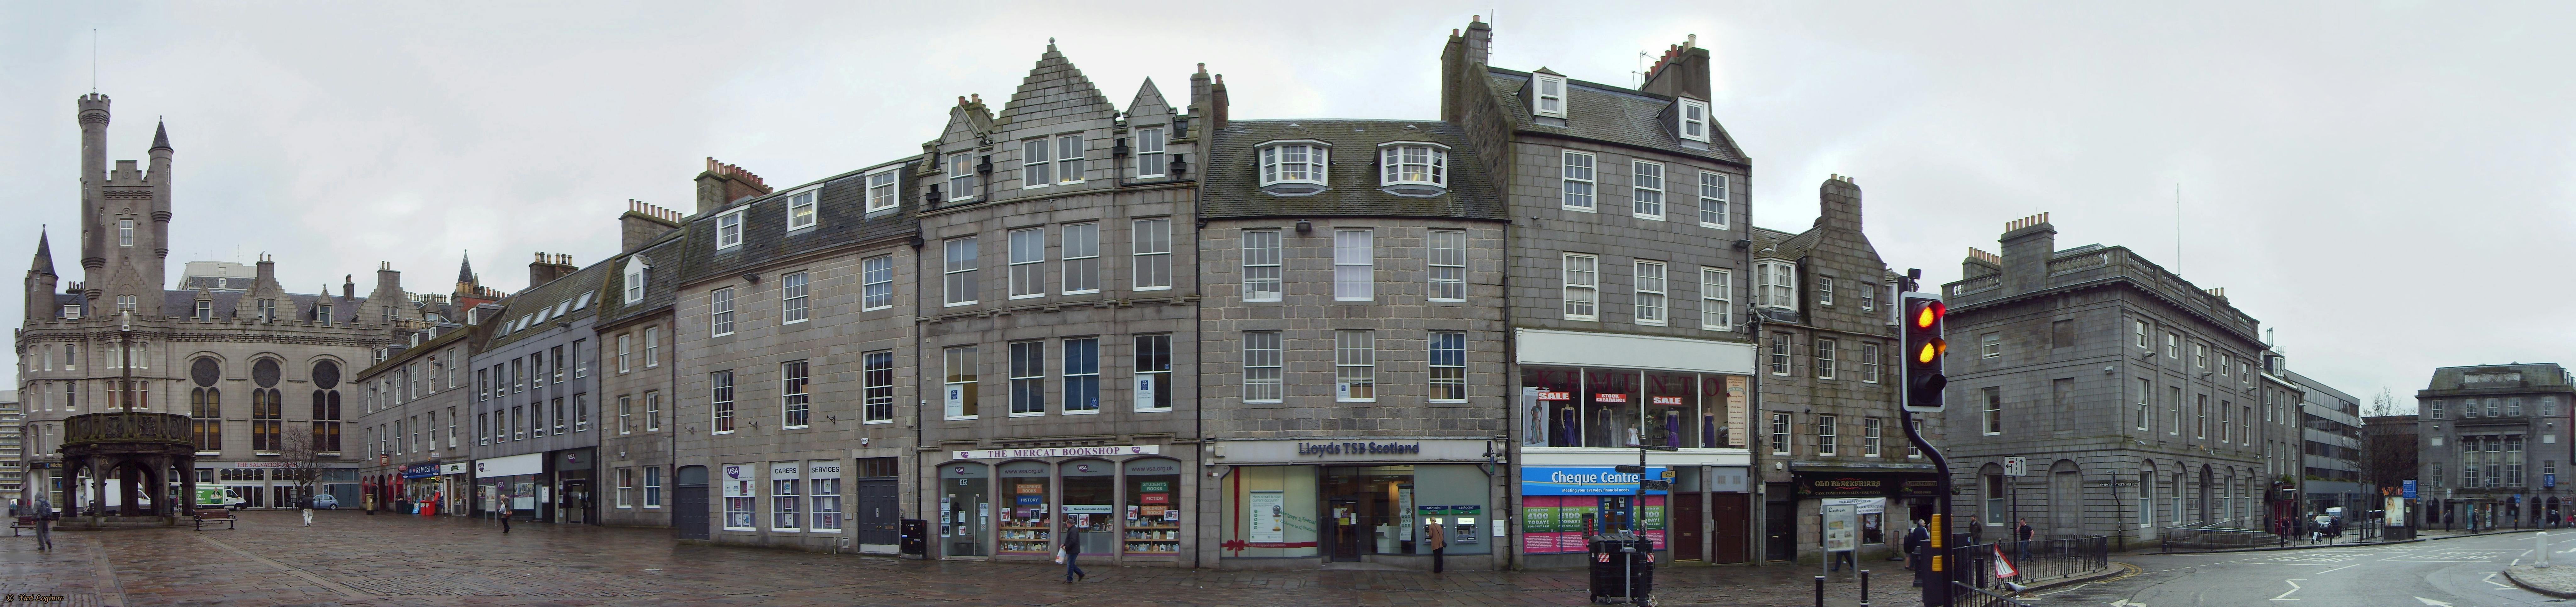 Free stock photo of Aberdeen, scotland, united kingdom